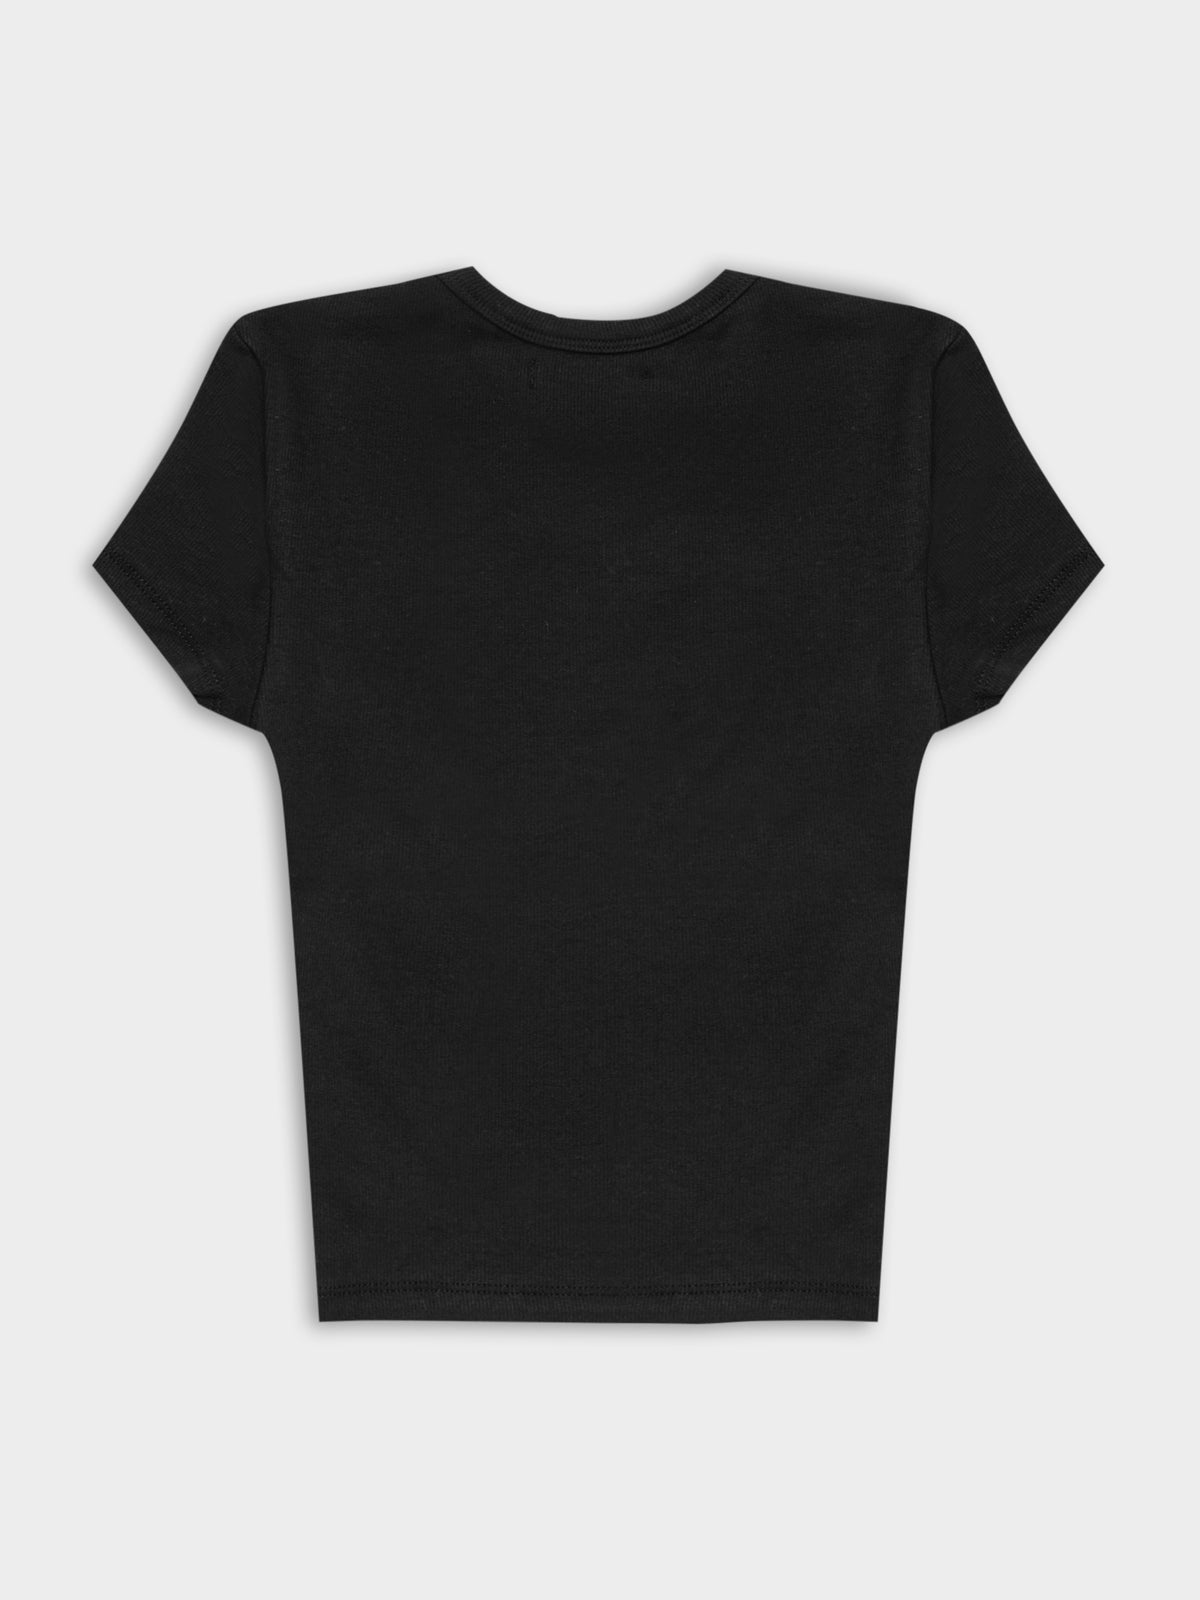 Briony Crew Neck T-Shirt in Black